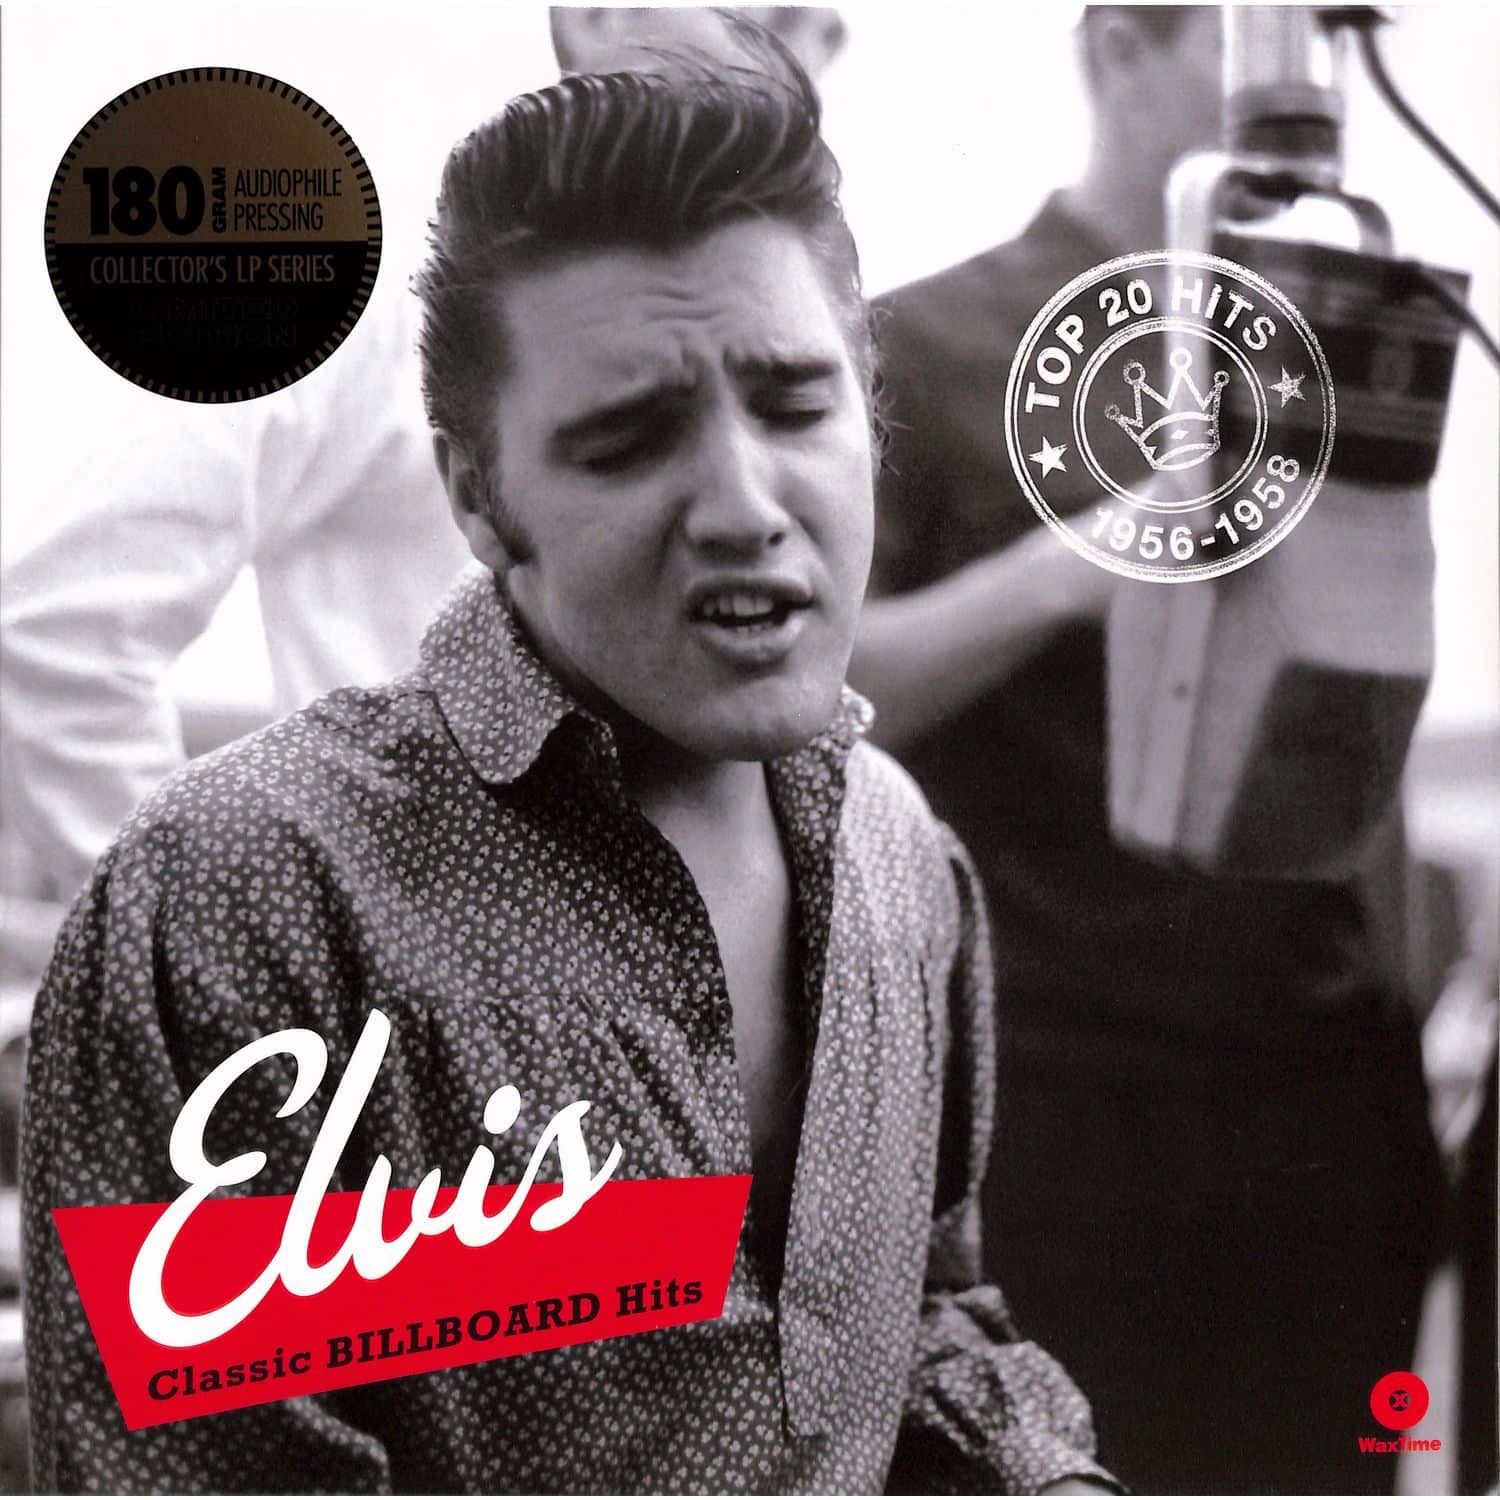 Elvis Presley - CLASSIC BILLBOARD HITS